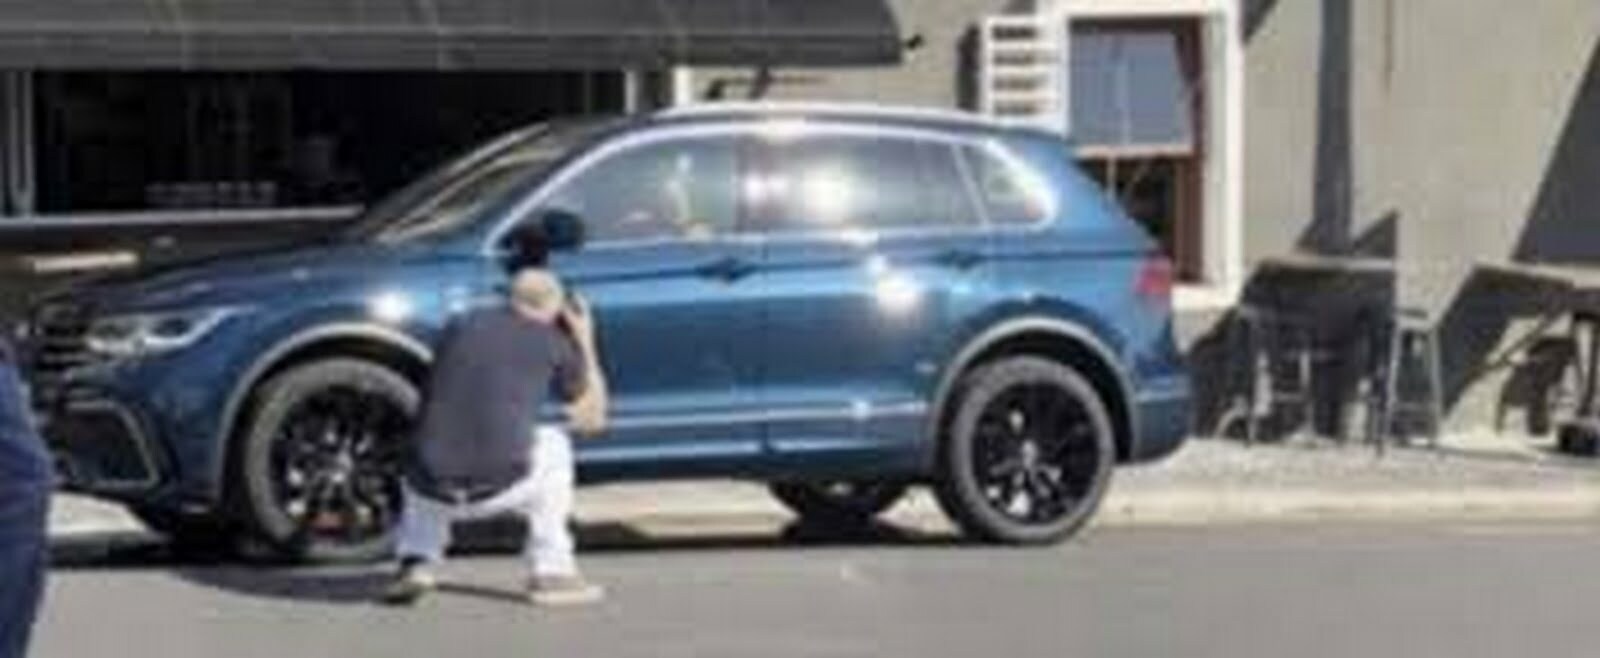 FormaCar: 2020 Volkswagen Tiguan spied during ad shoot